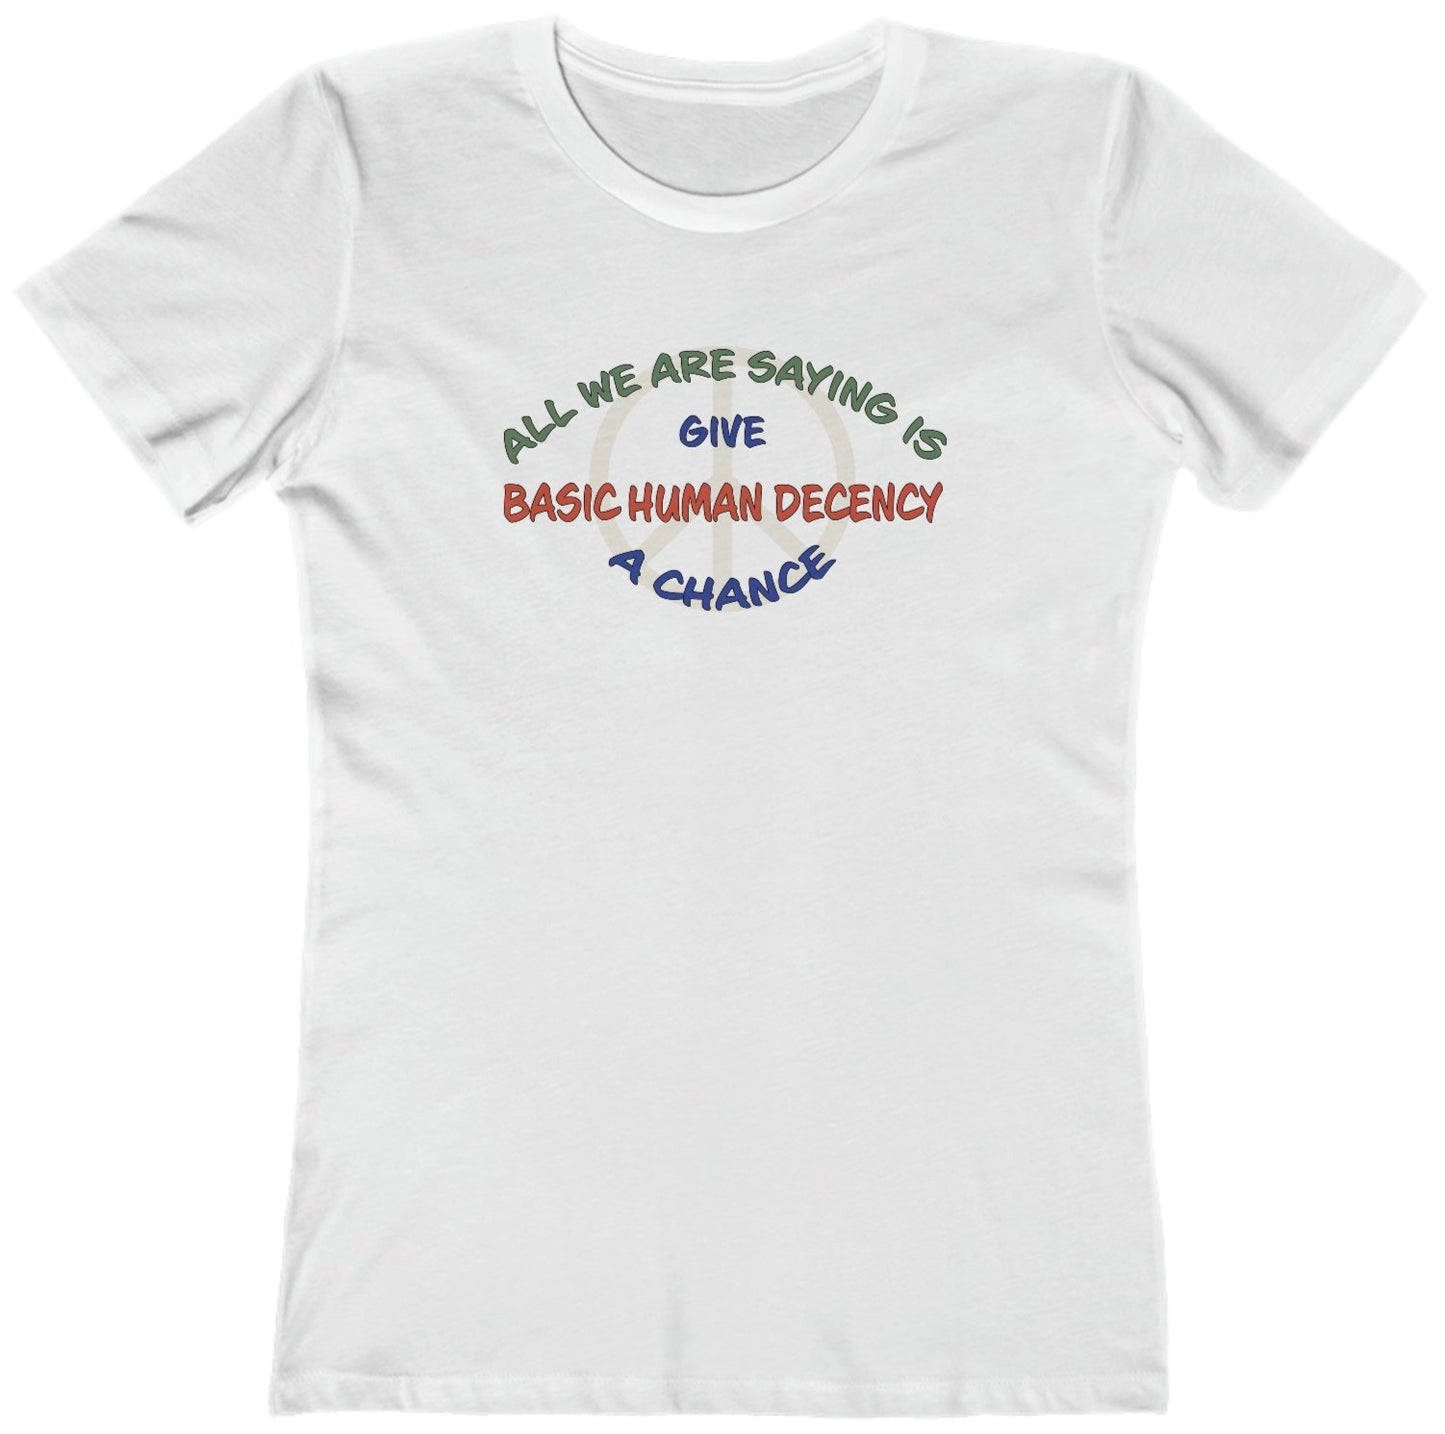 Give Basic Human Decency a Chance - Women's T-Shirt